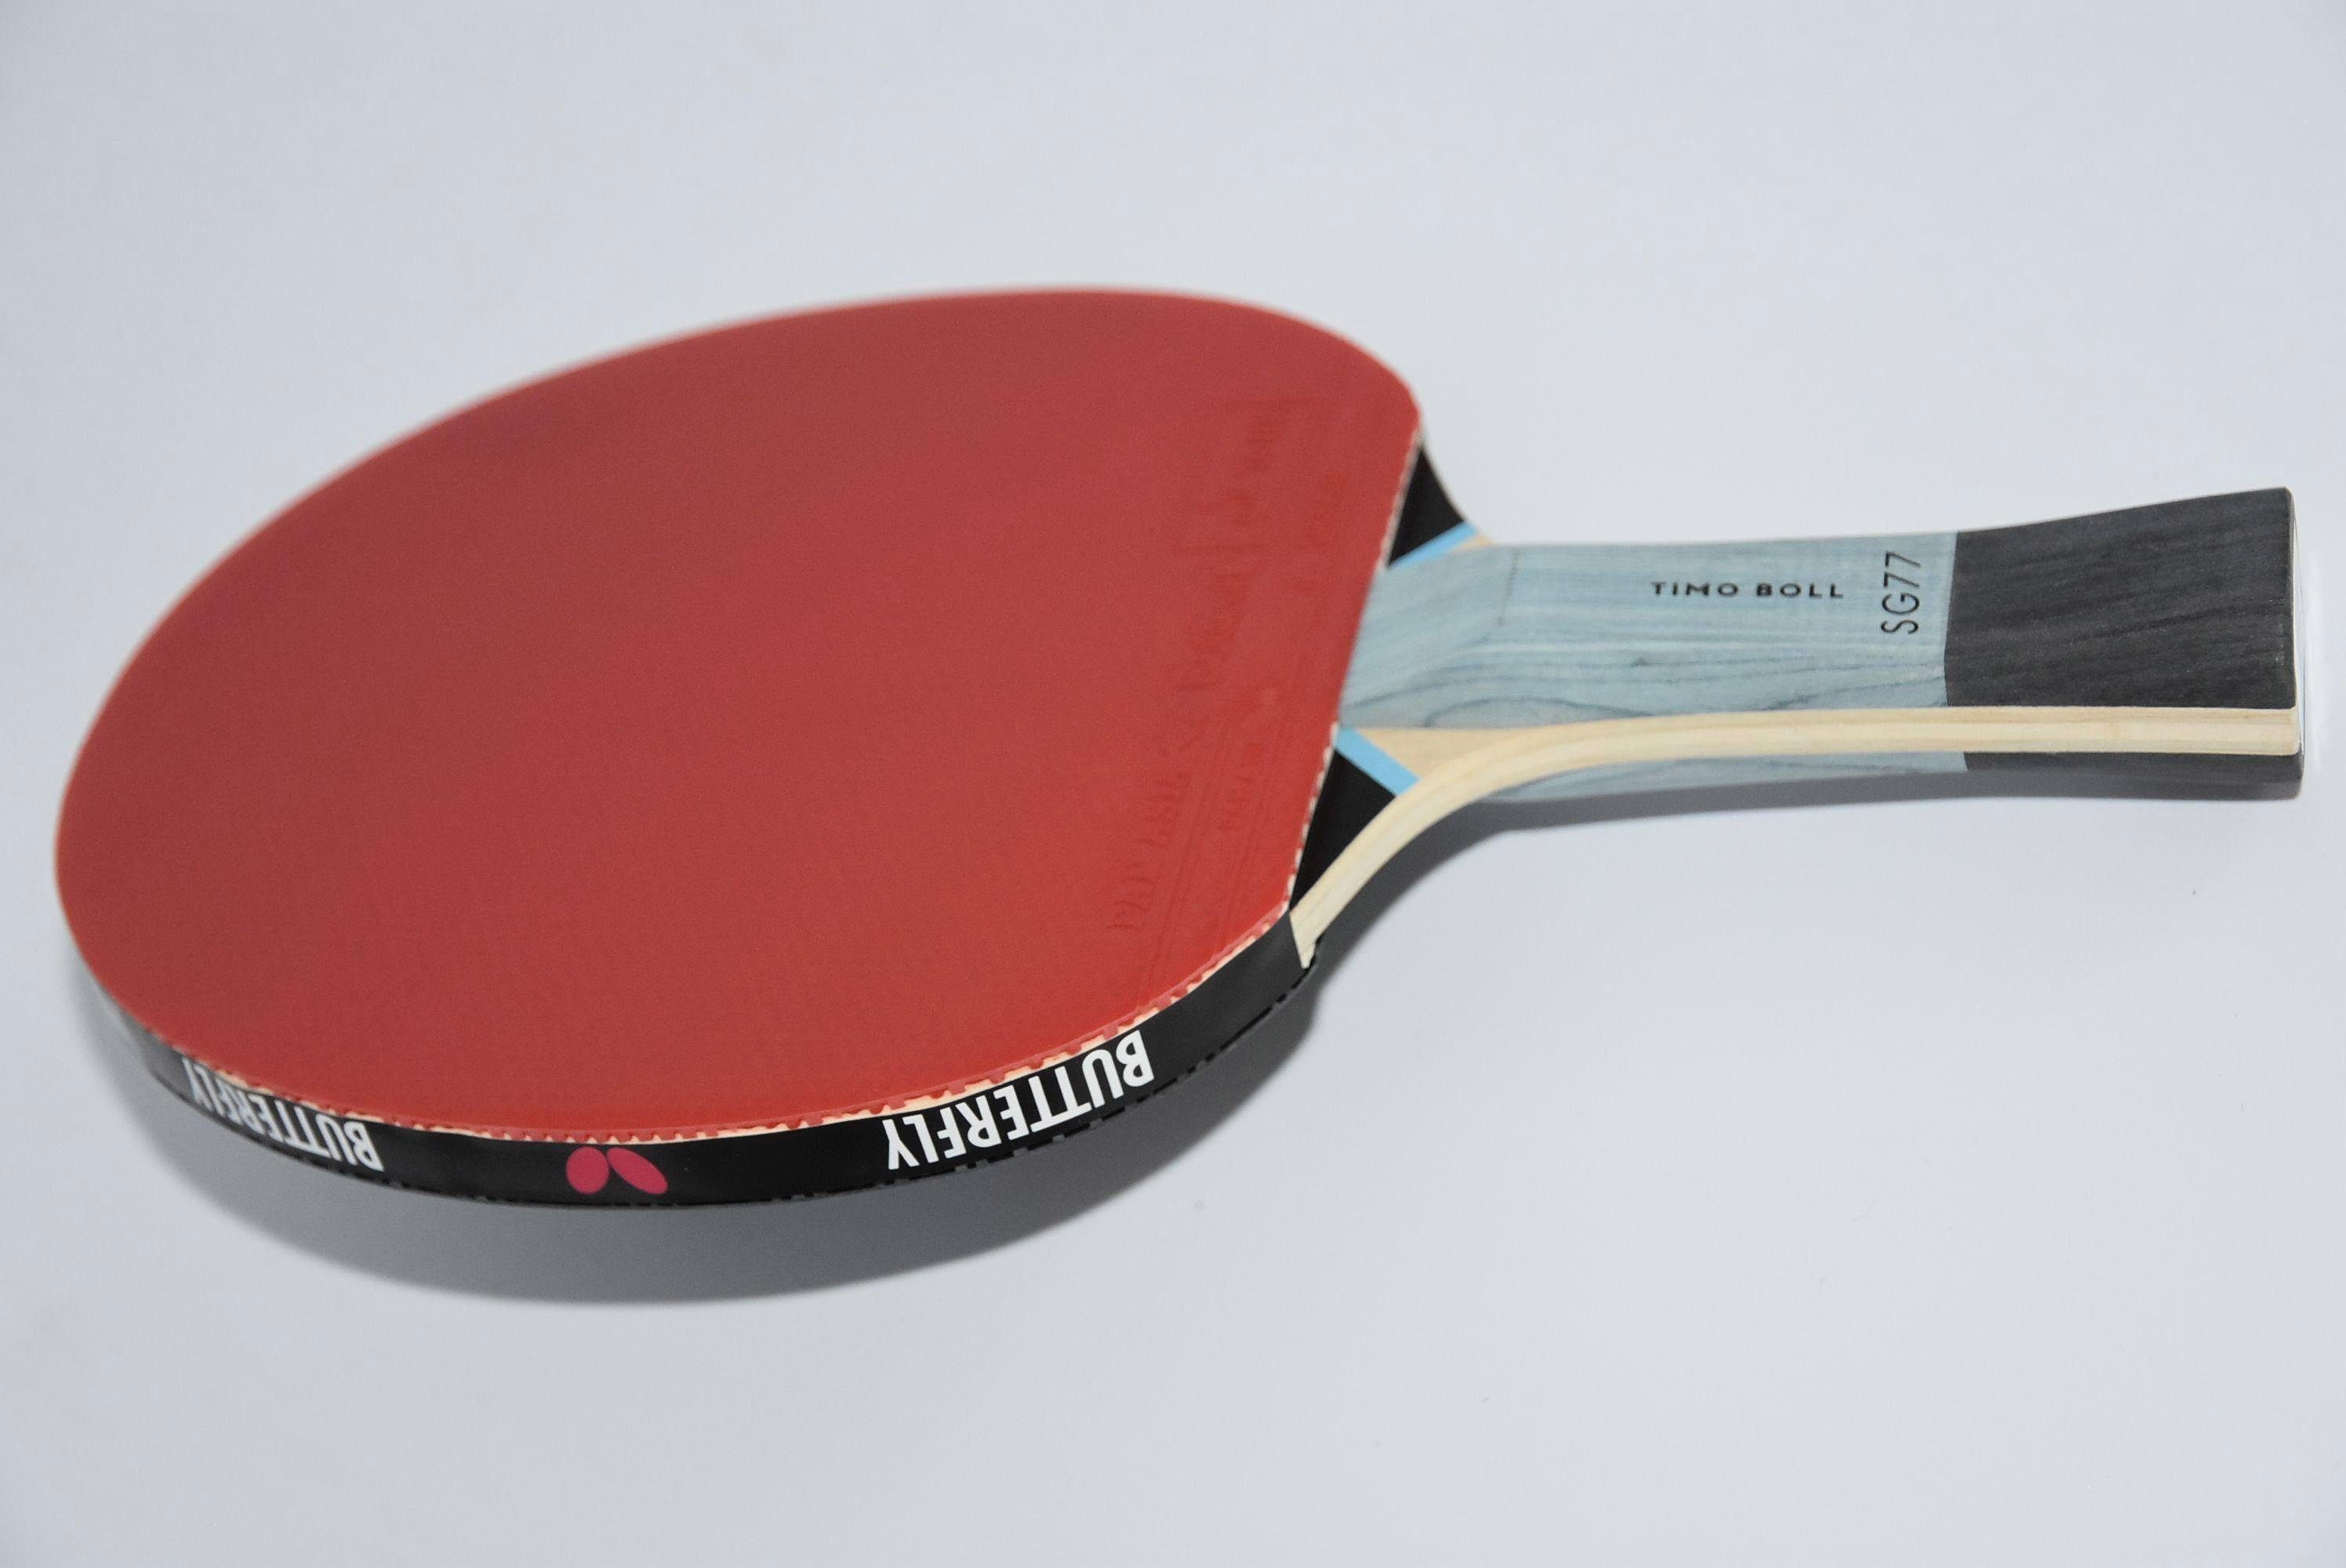 Grifftechnologie Tischtennisschläger Boll Einzigartige Timo SG77, Butterfly "smart.grip"